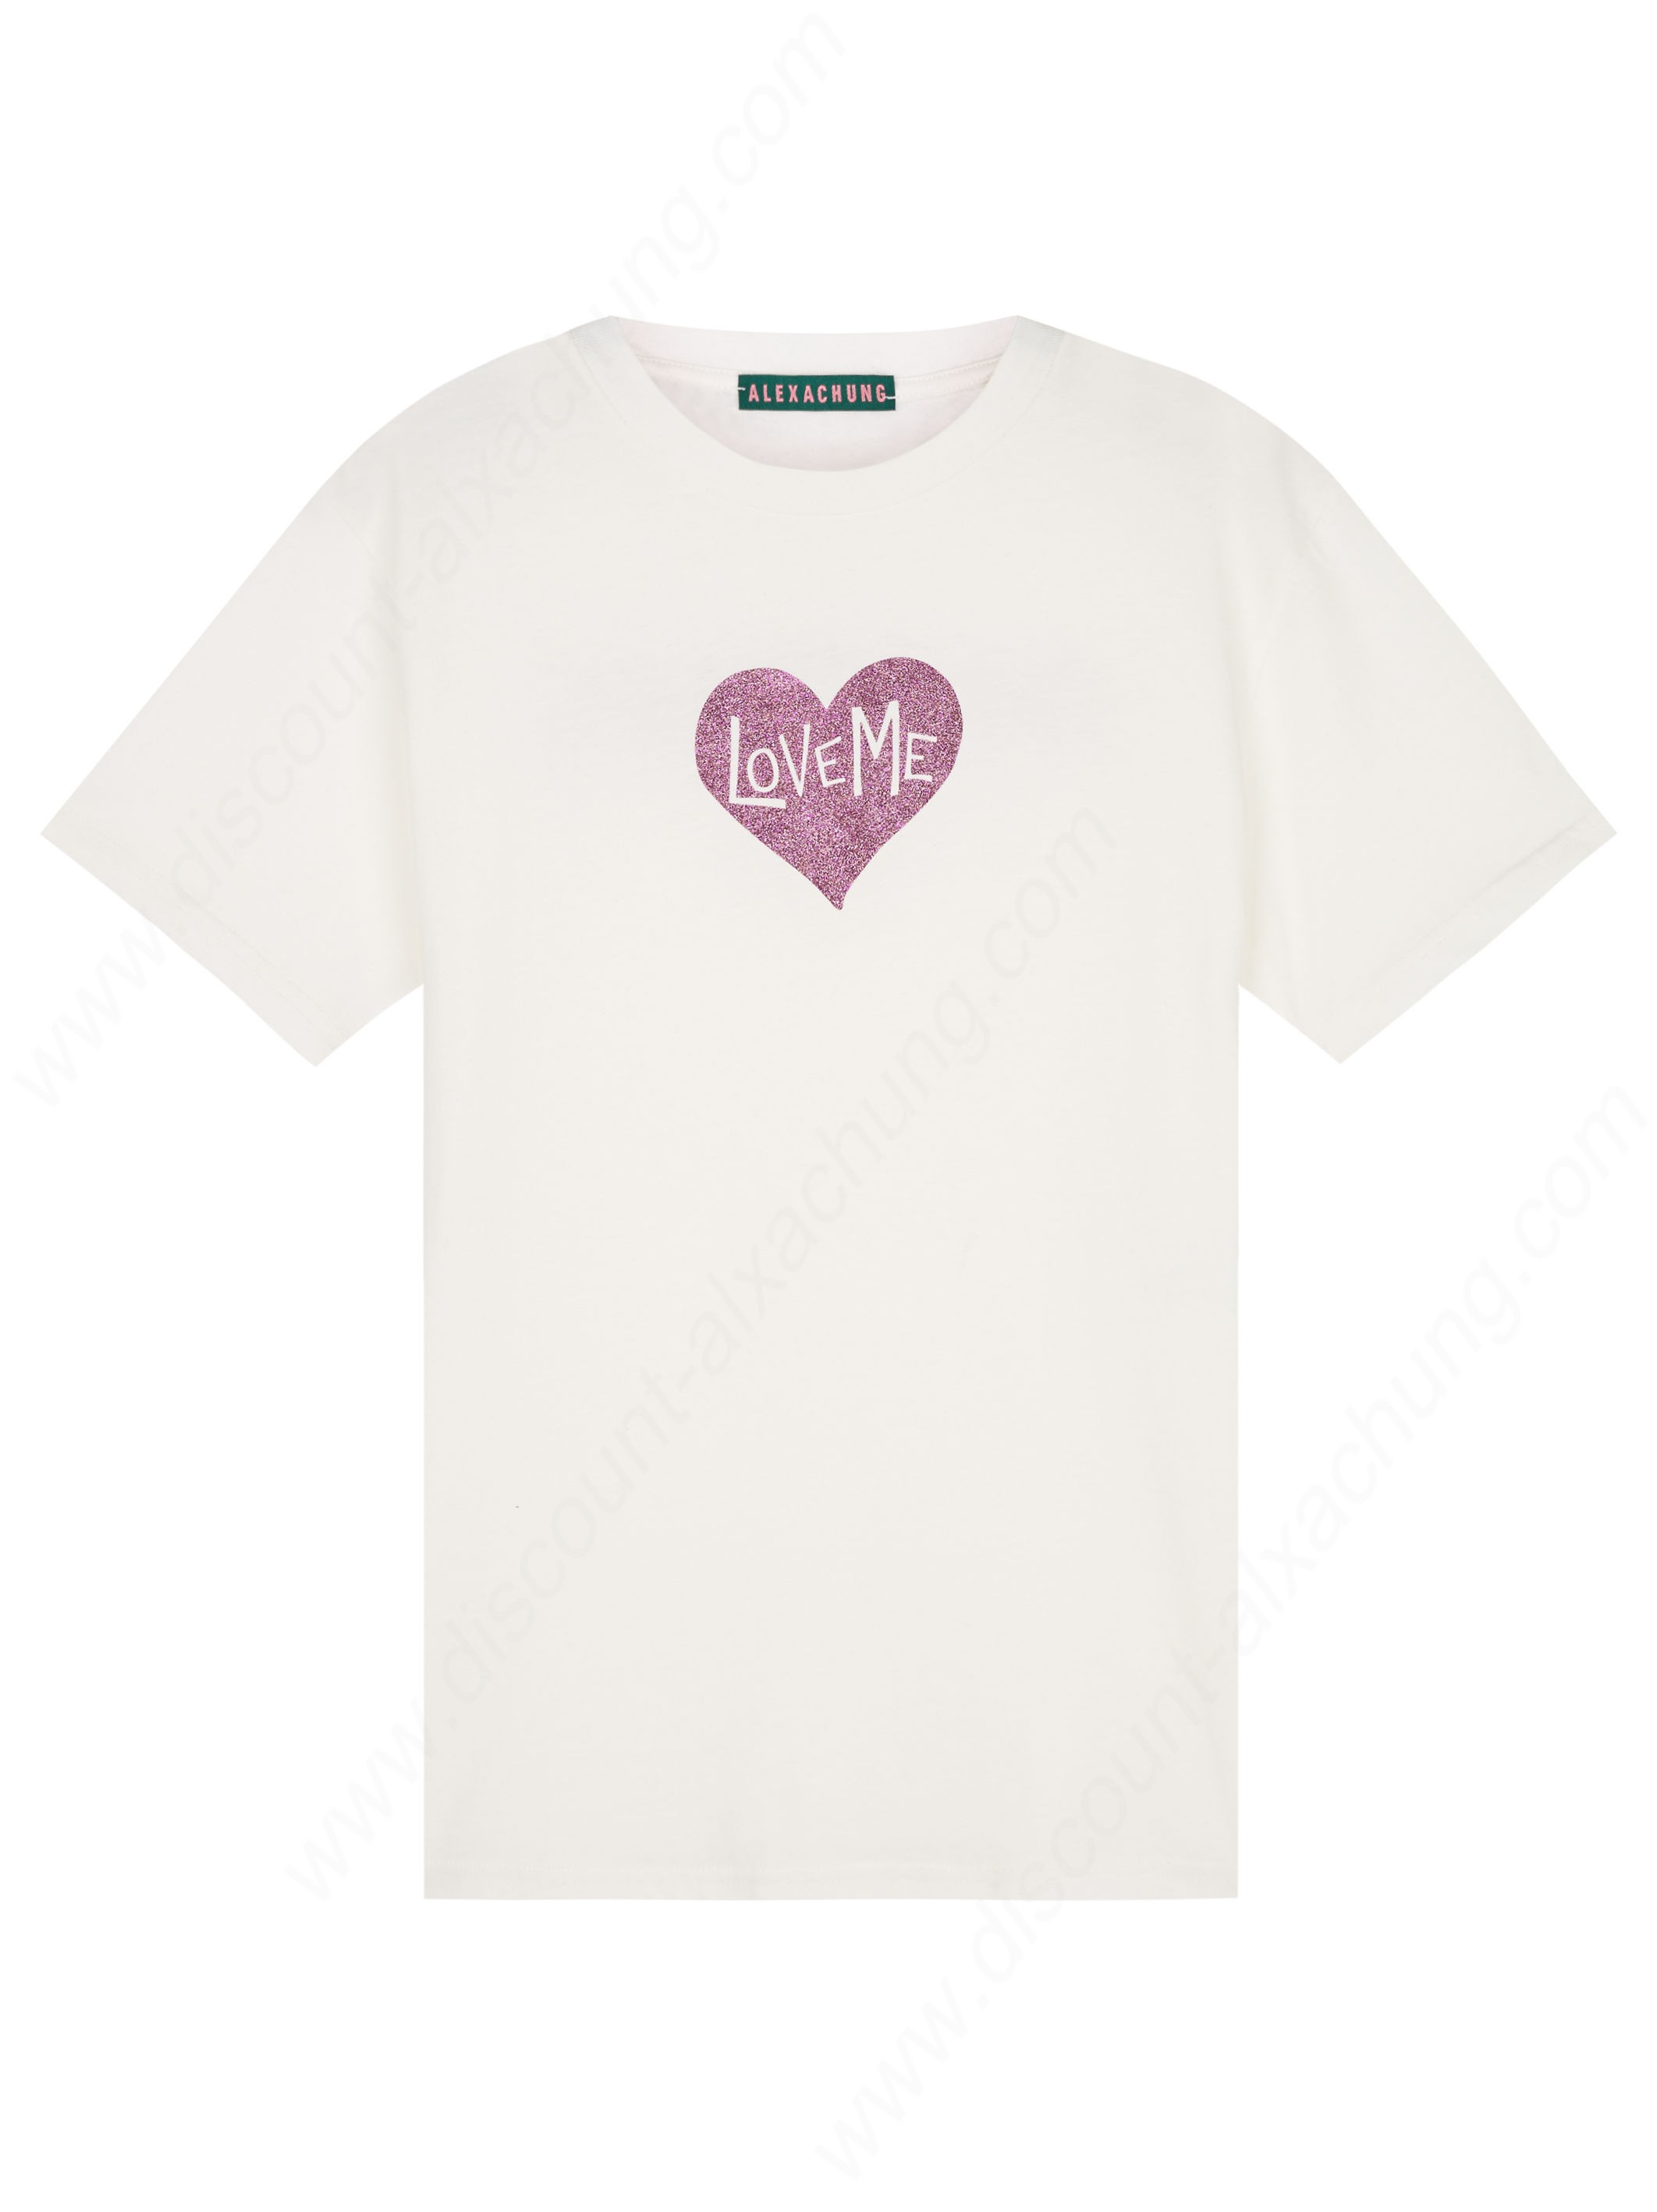 Alexachung Love Me Glitter Shirts - Alexachung Love Me Glitter Shirts